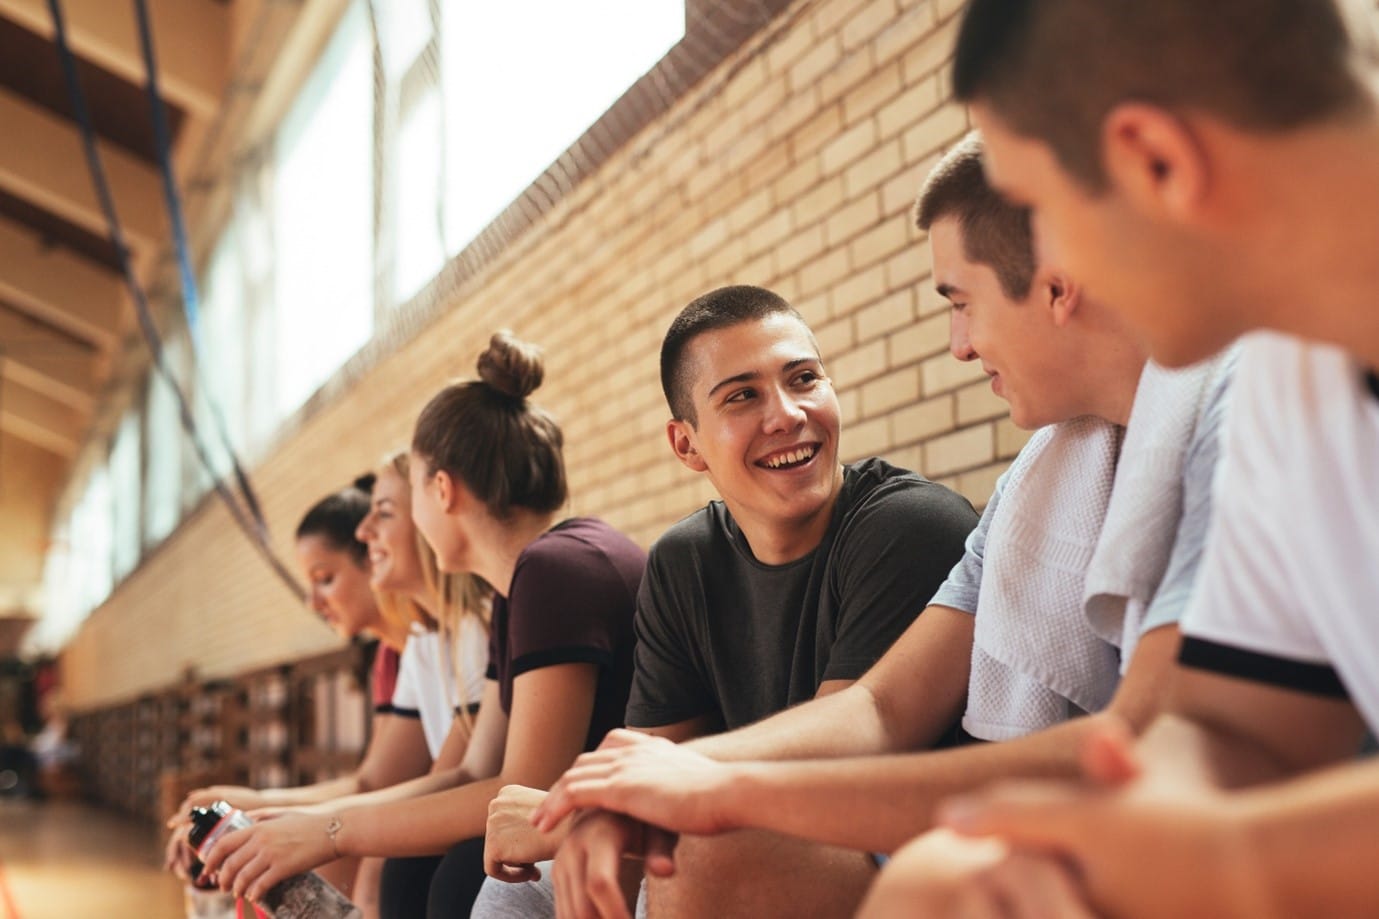 En gruppe ungdommer sitter samlet i en gymsal, men se prater og smiler til hverandre.